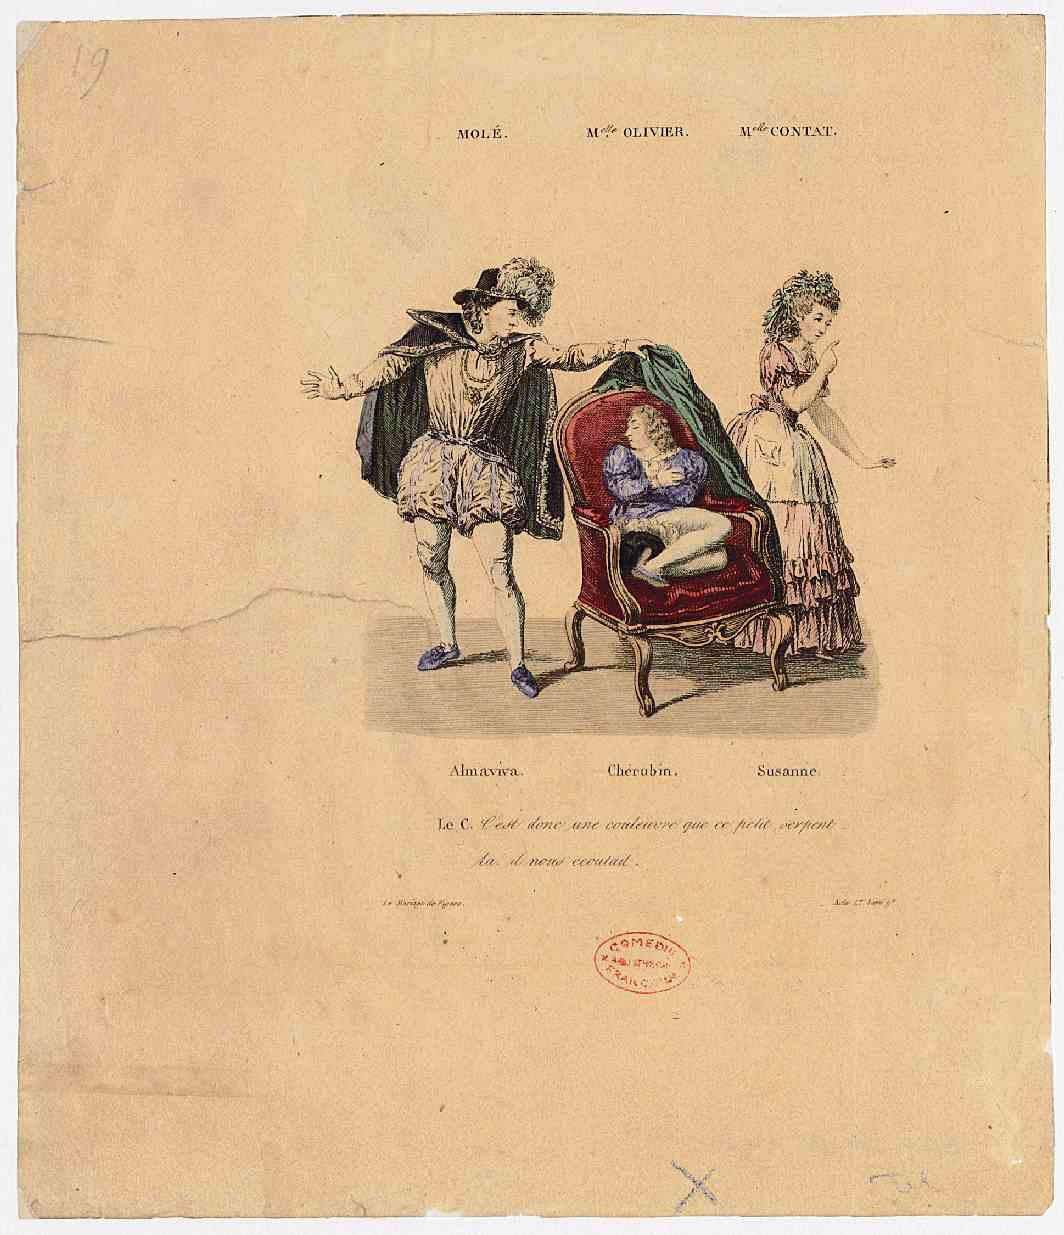 Le Mariage de Figaro (Molé (Almaviva), Mlle Olivier (Chérubin) et Mlle Contat (Susanne))